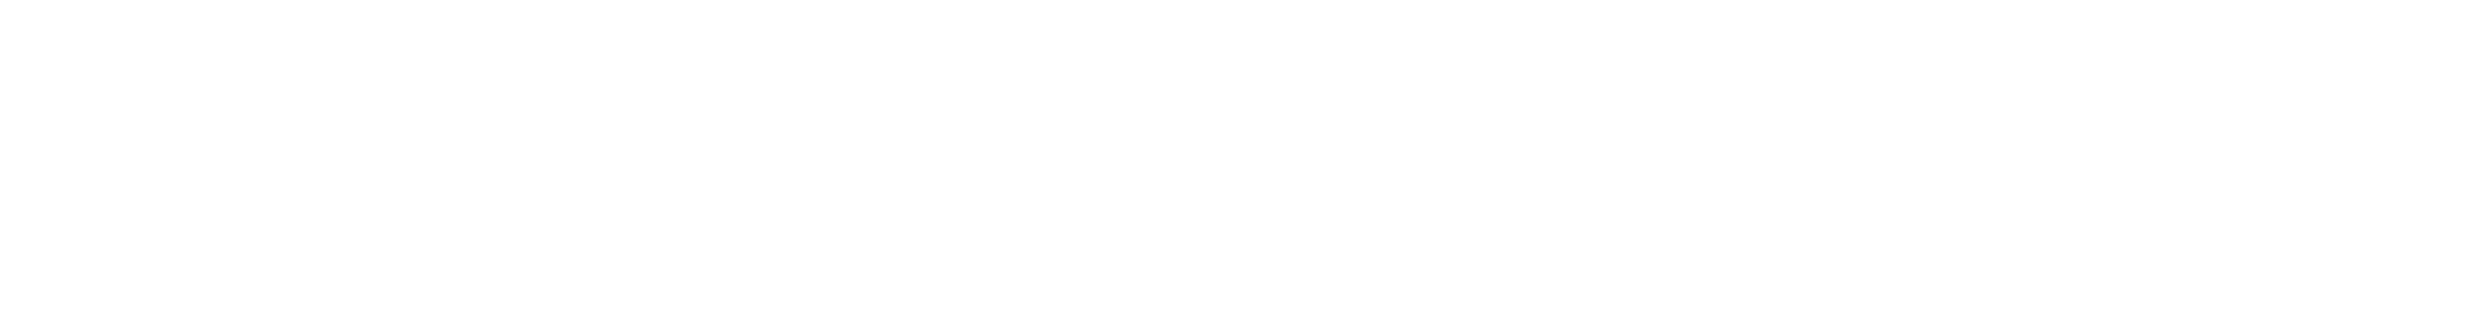 DZ-Bank Logo Abbildung